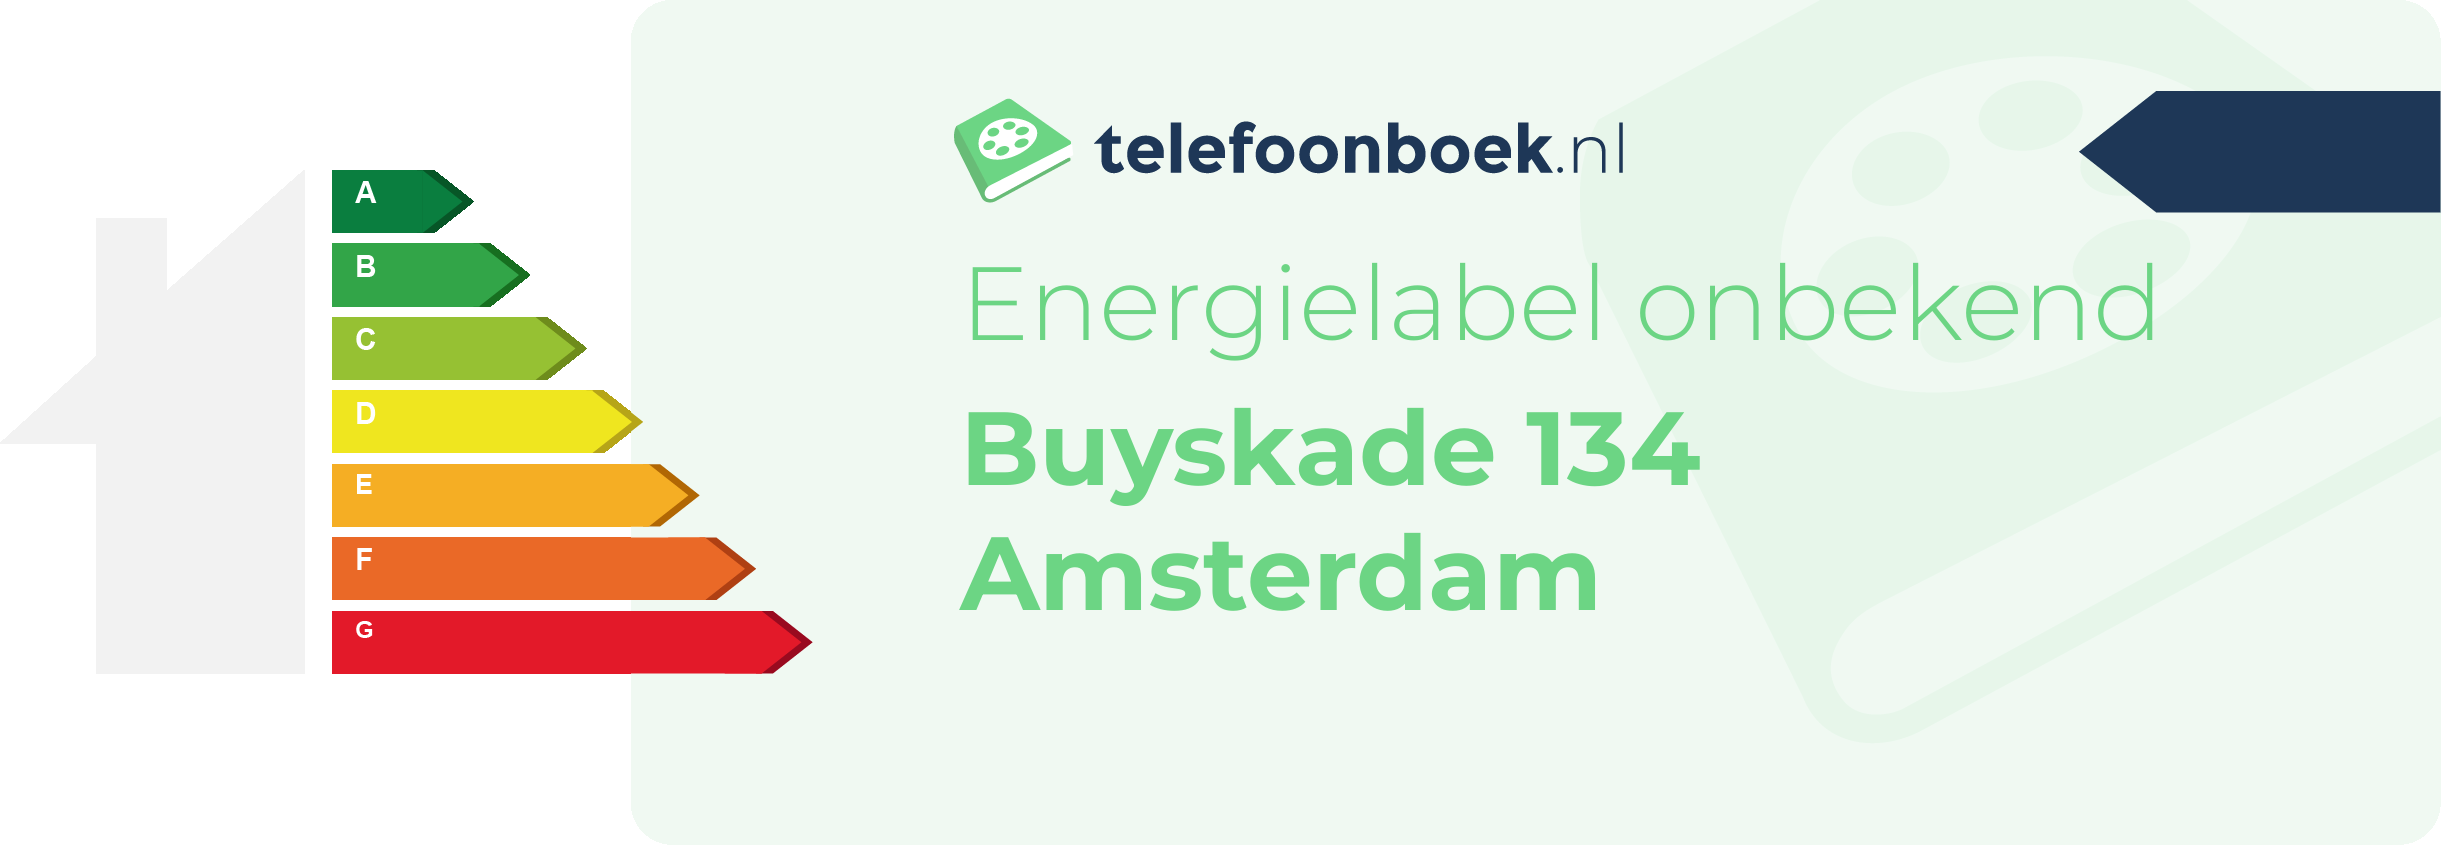 Energielabel Buyskade 134 Amsterdam